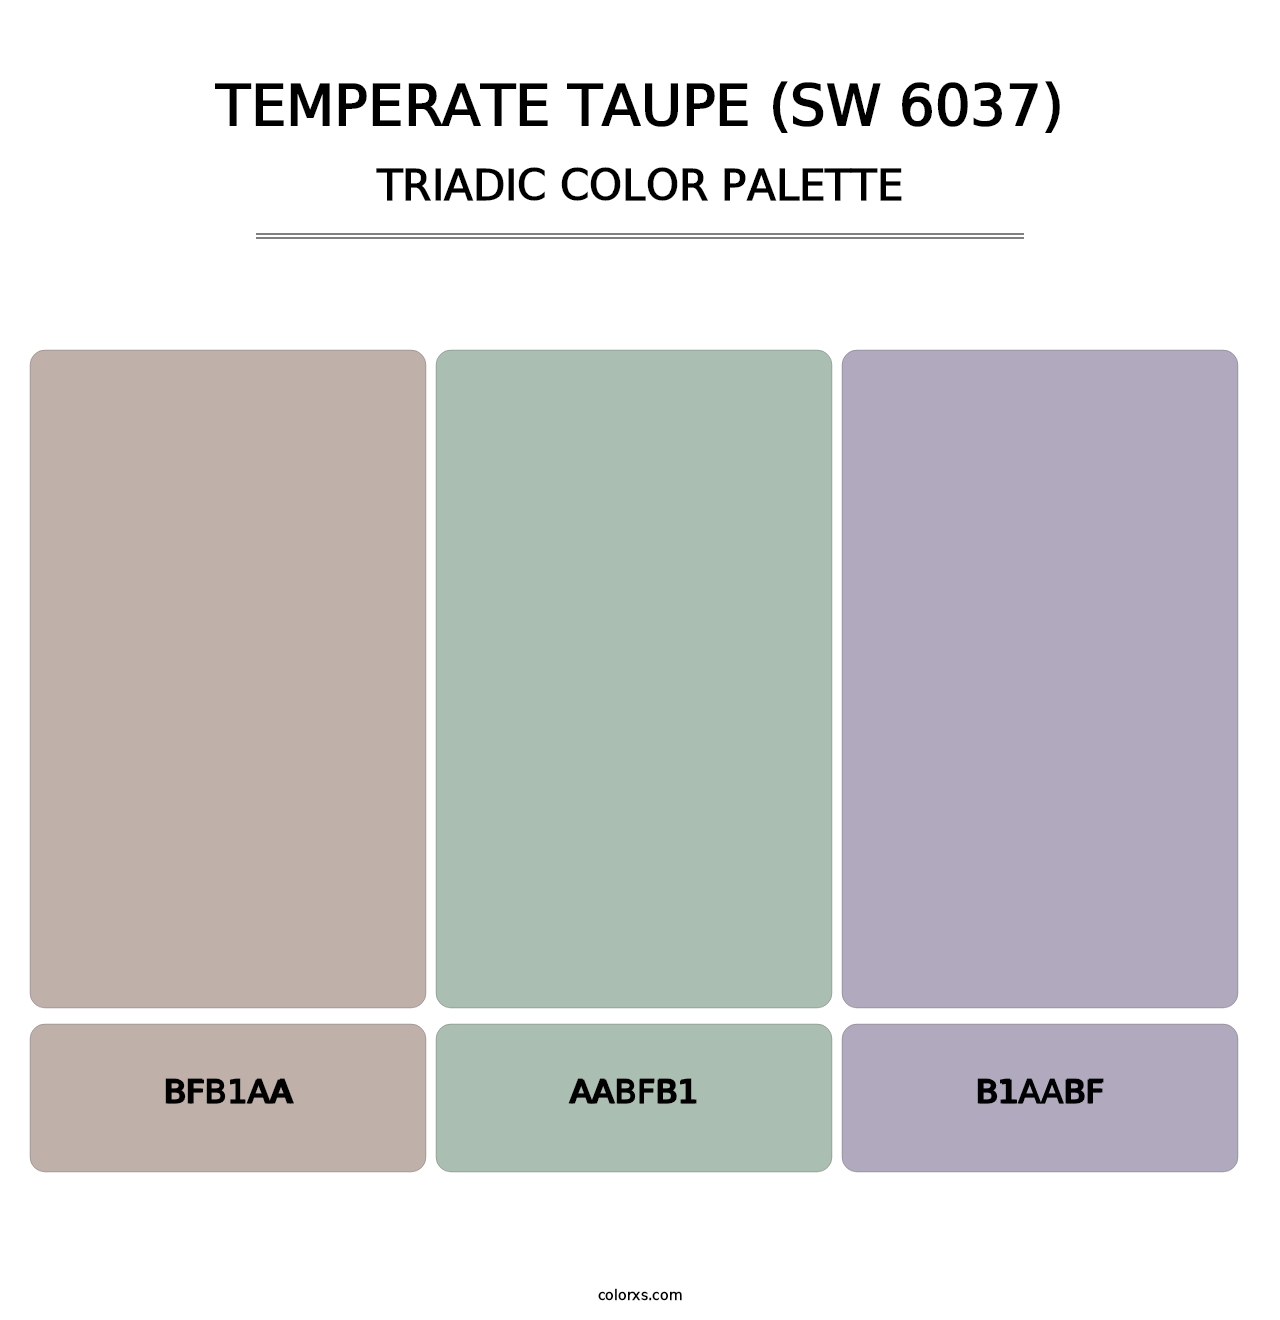 Temperate Taupe (SW 6037) - Triadic Color Palette